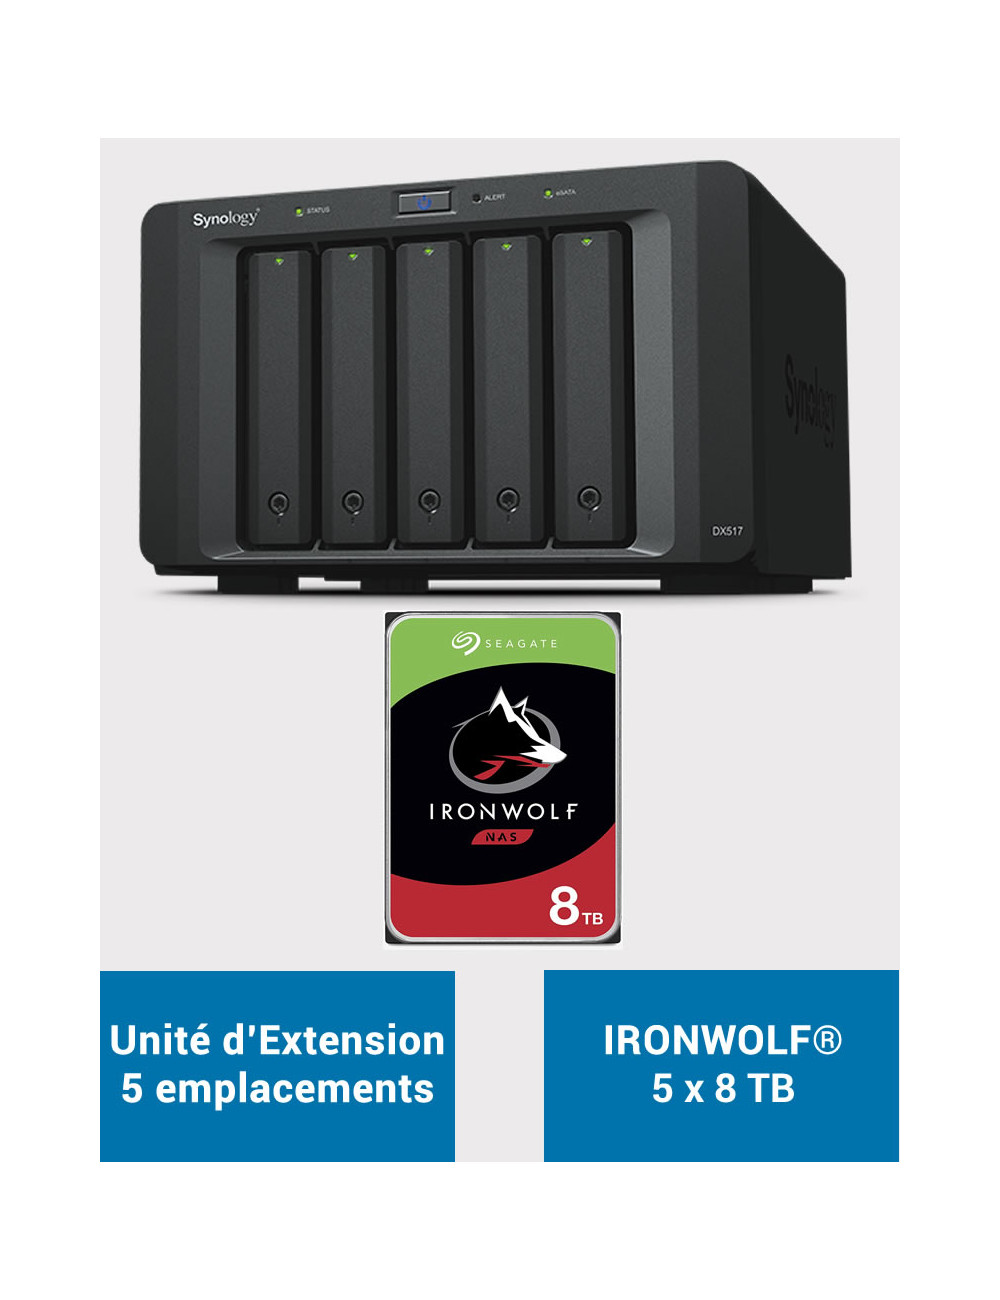 Synology DX517 Unidad de expansión IRONWOLF PRO 40TB (5x8TB)